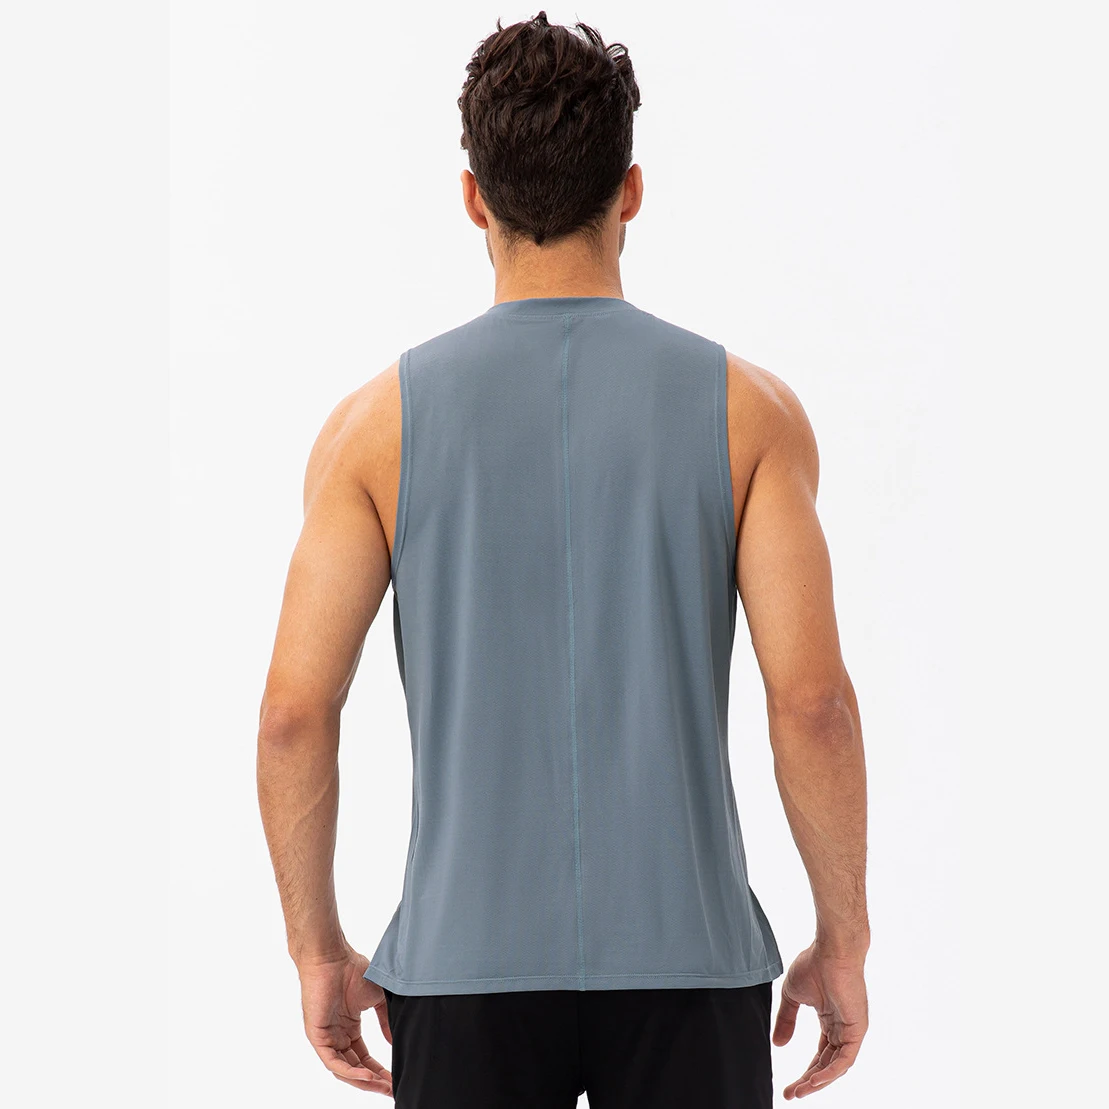 Men Gym Wear Basketball Tank Top Fitness Running Vest Sleeveless Plus Size Sports T Shirt